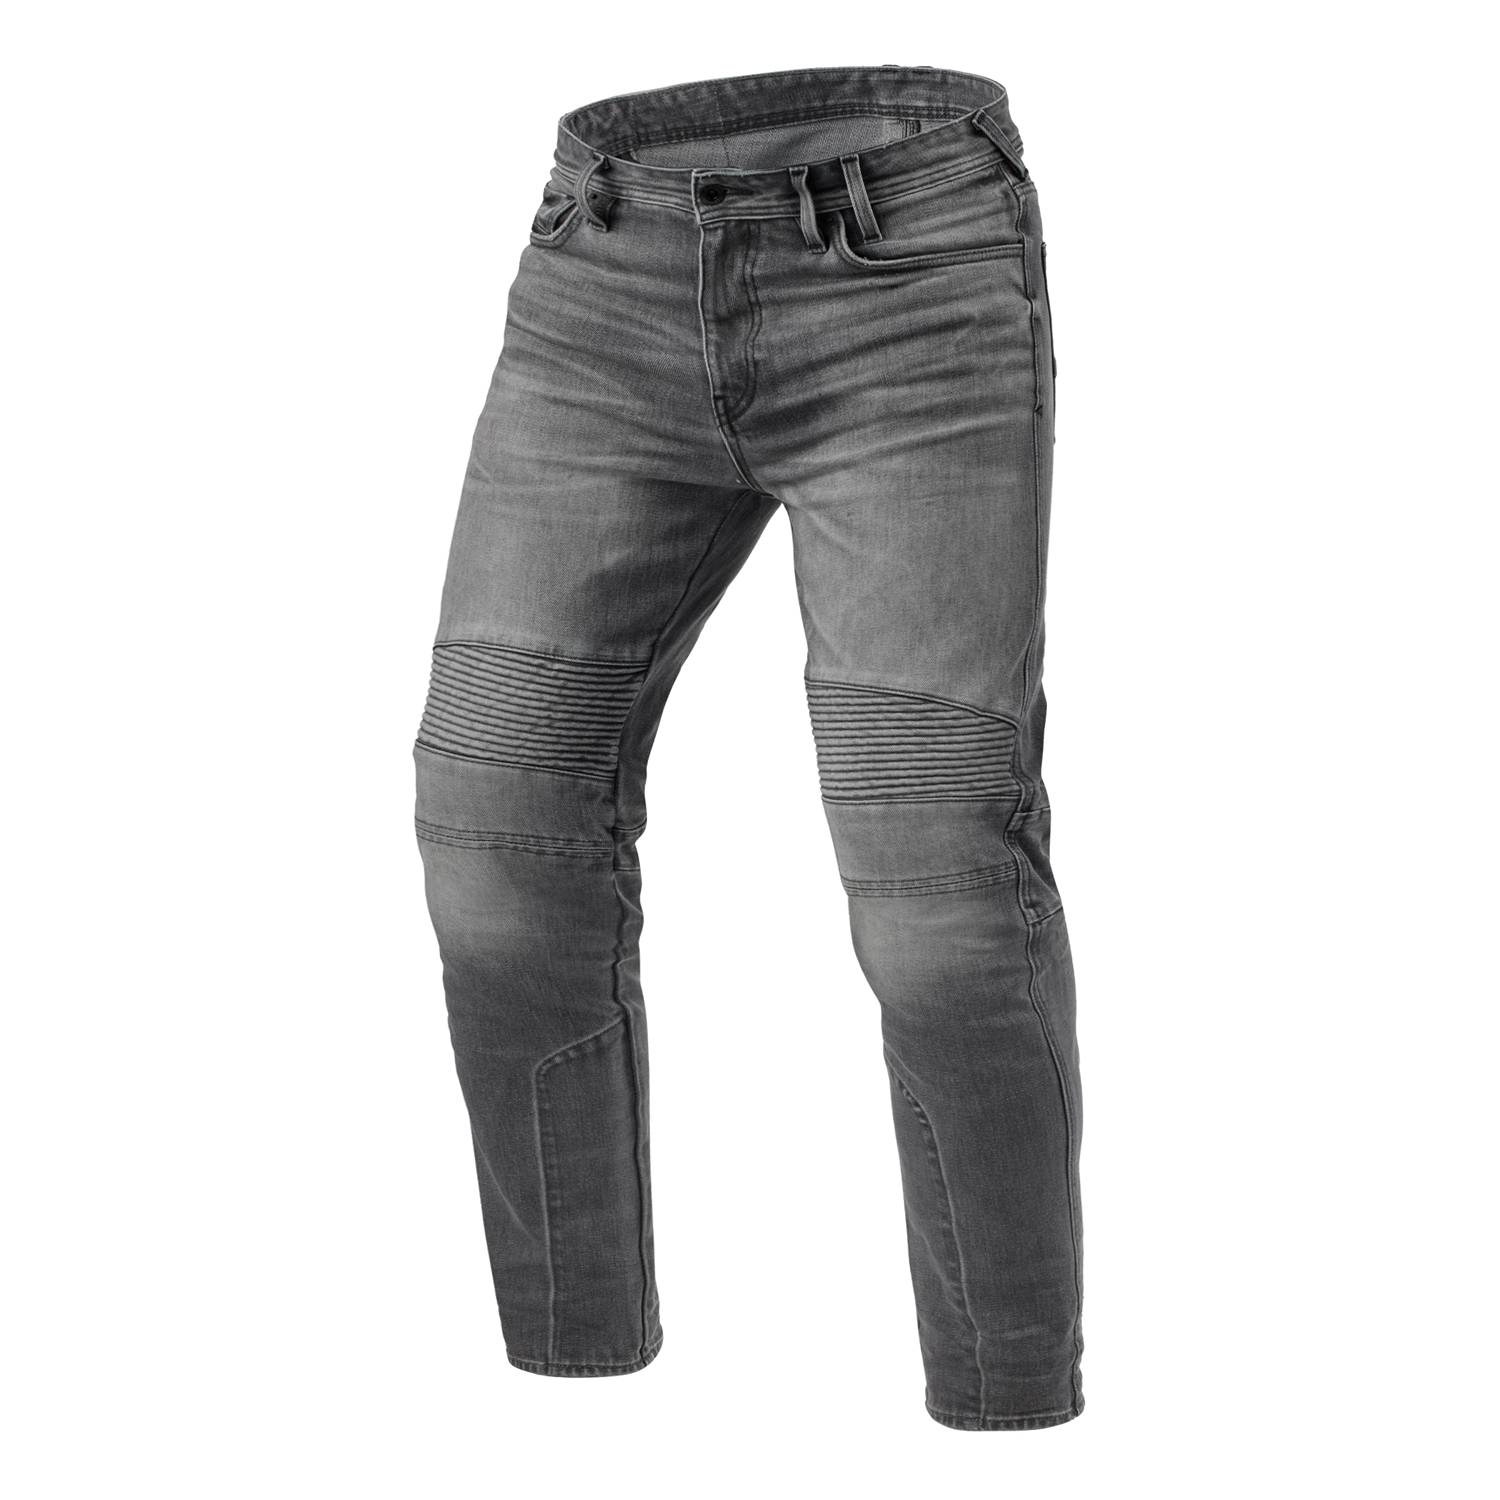 Image of REV'IT! Jeans Moto 2 TF Medium Grey Used L36 Motorcycle Jeans Talla L36/W36